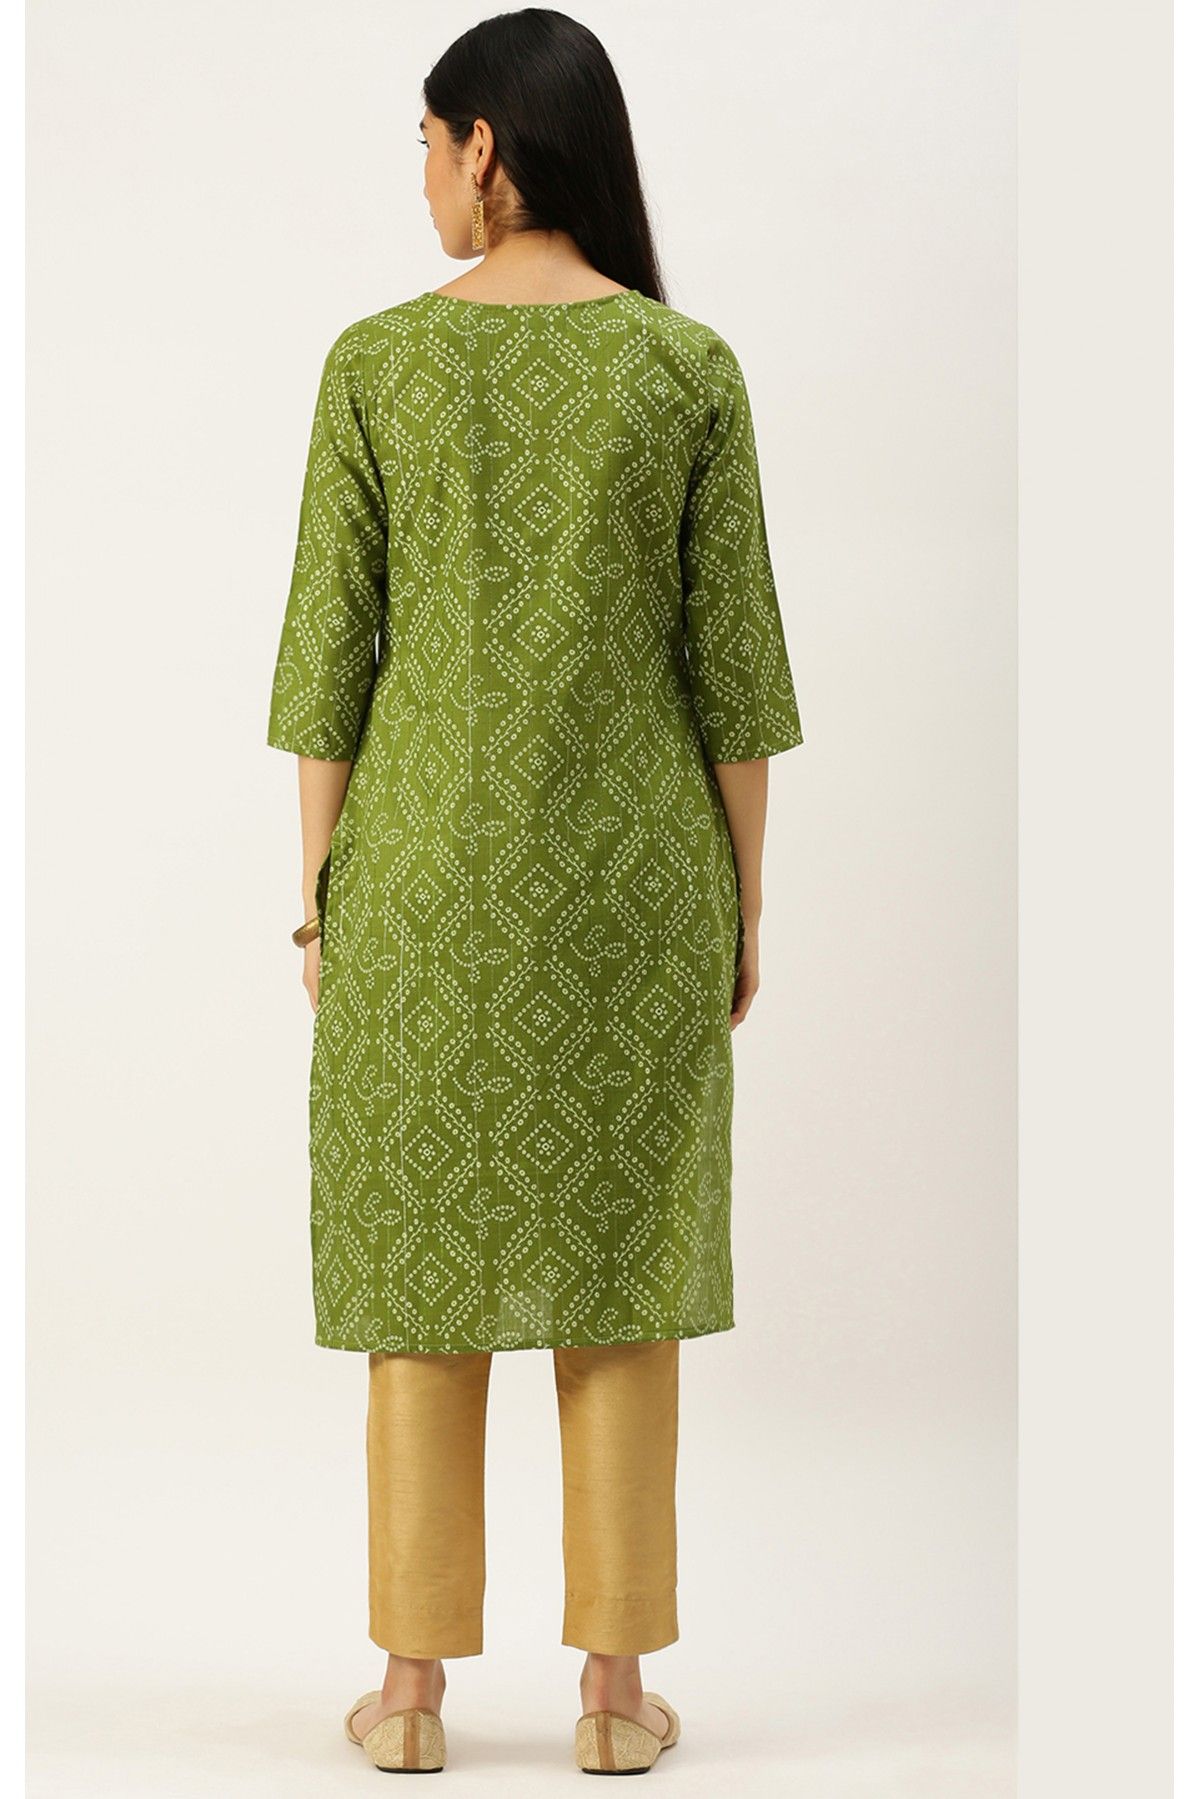 Cotton Casual Wear Kurti In Green Colour - KR5480579